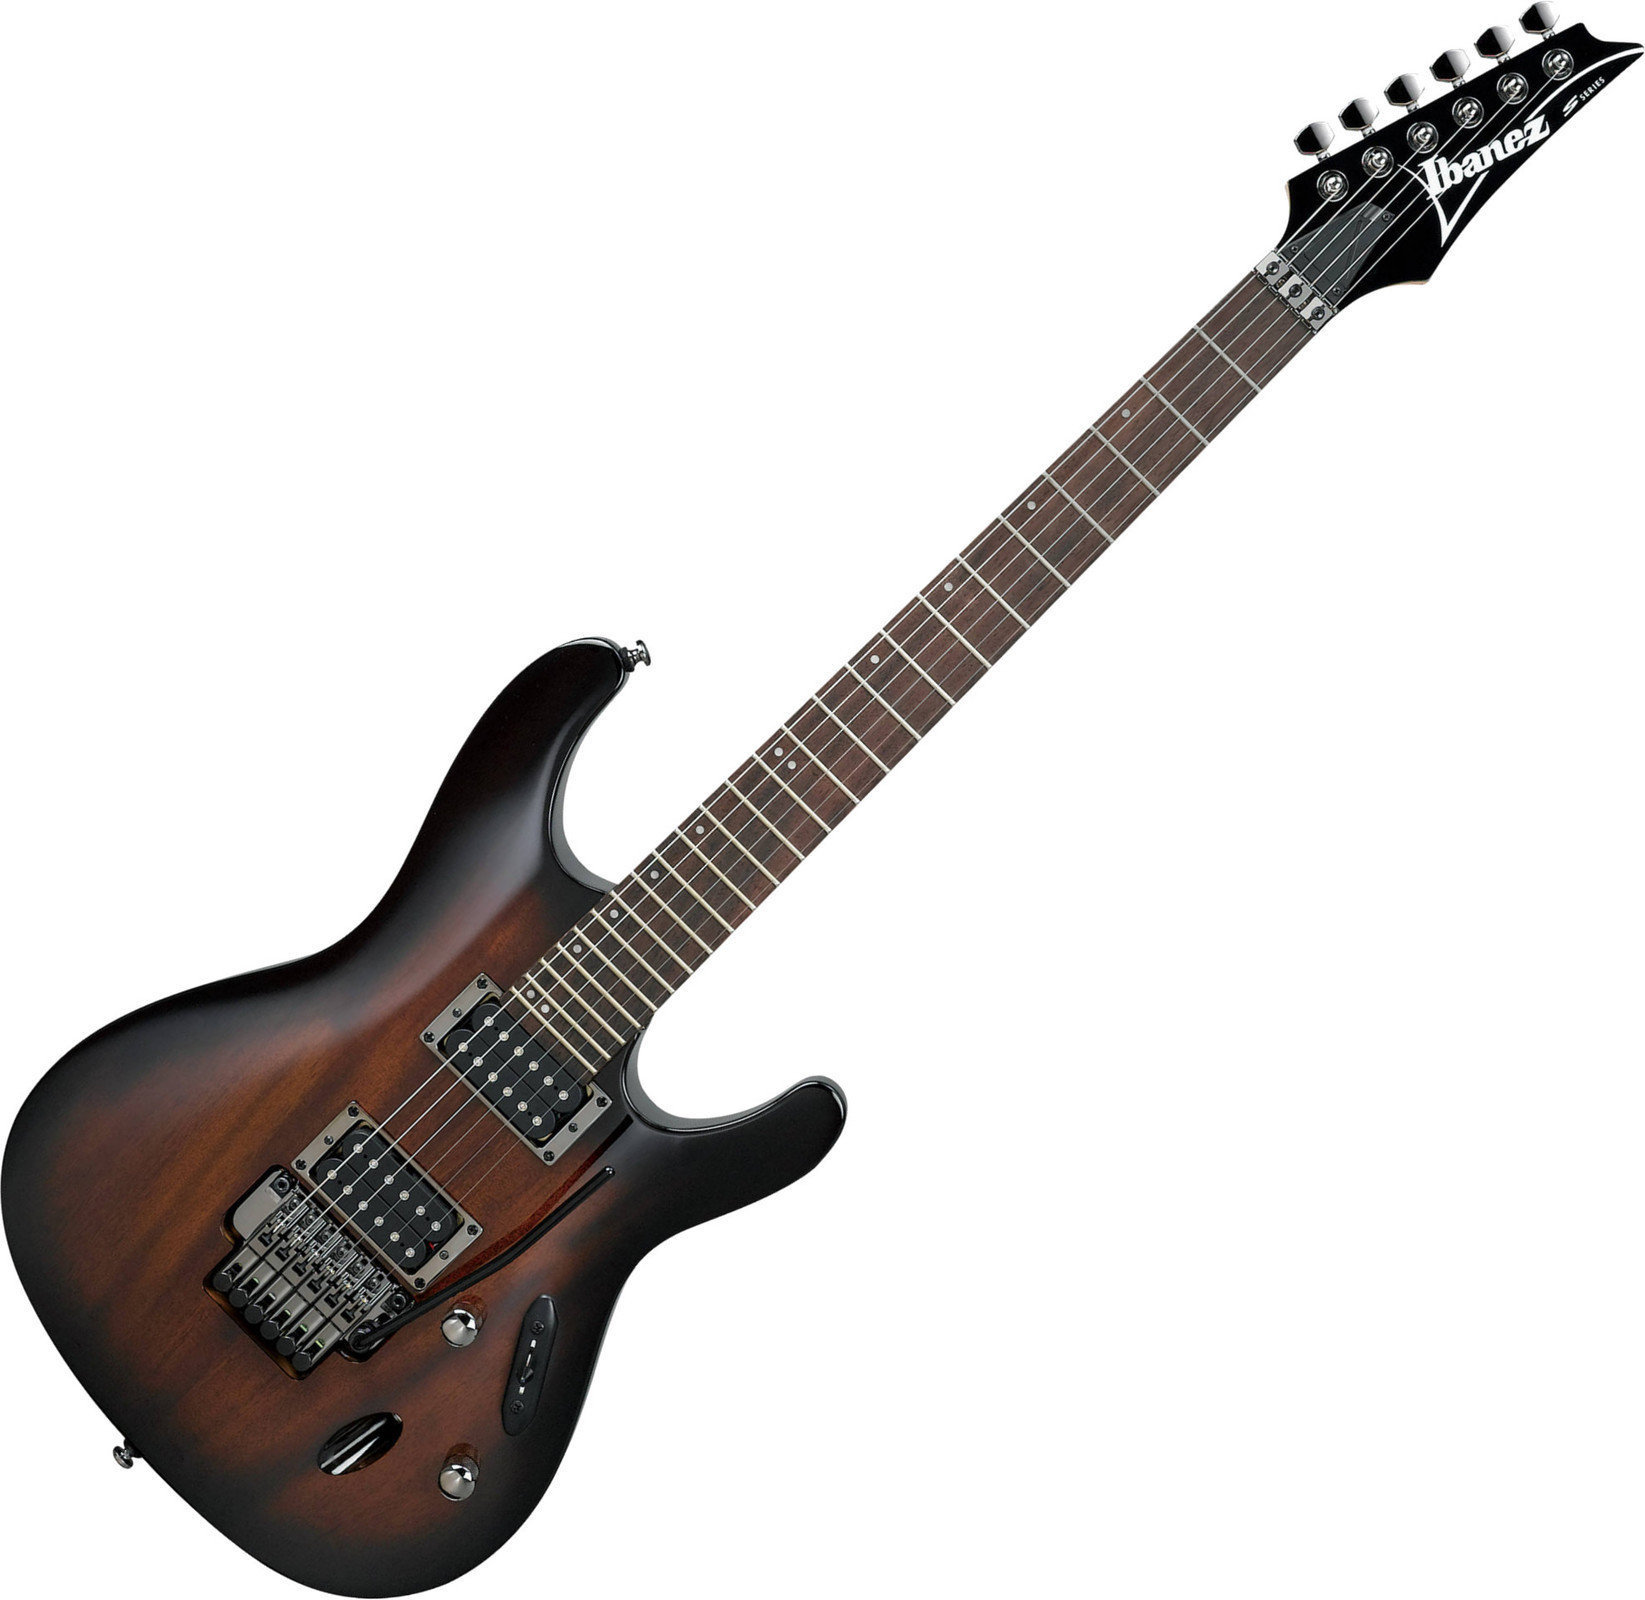 Electric guitar Ibanez S520 transparent Black Sunburst High Gloss